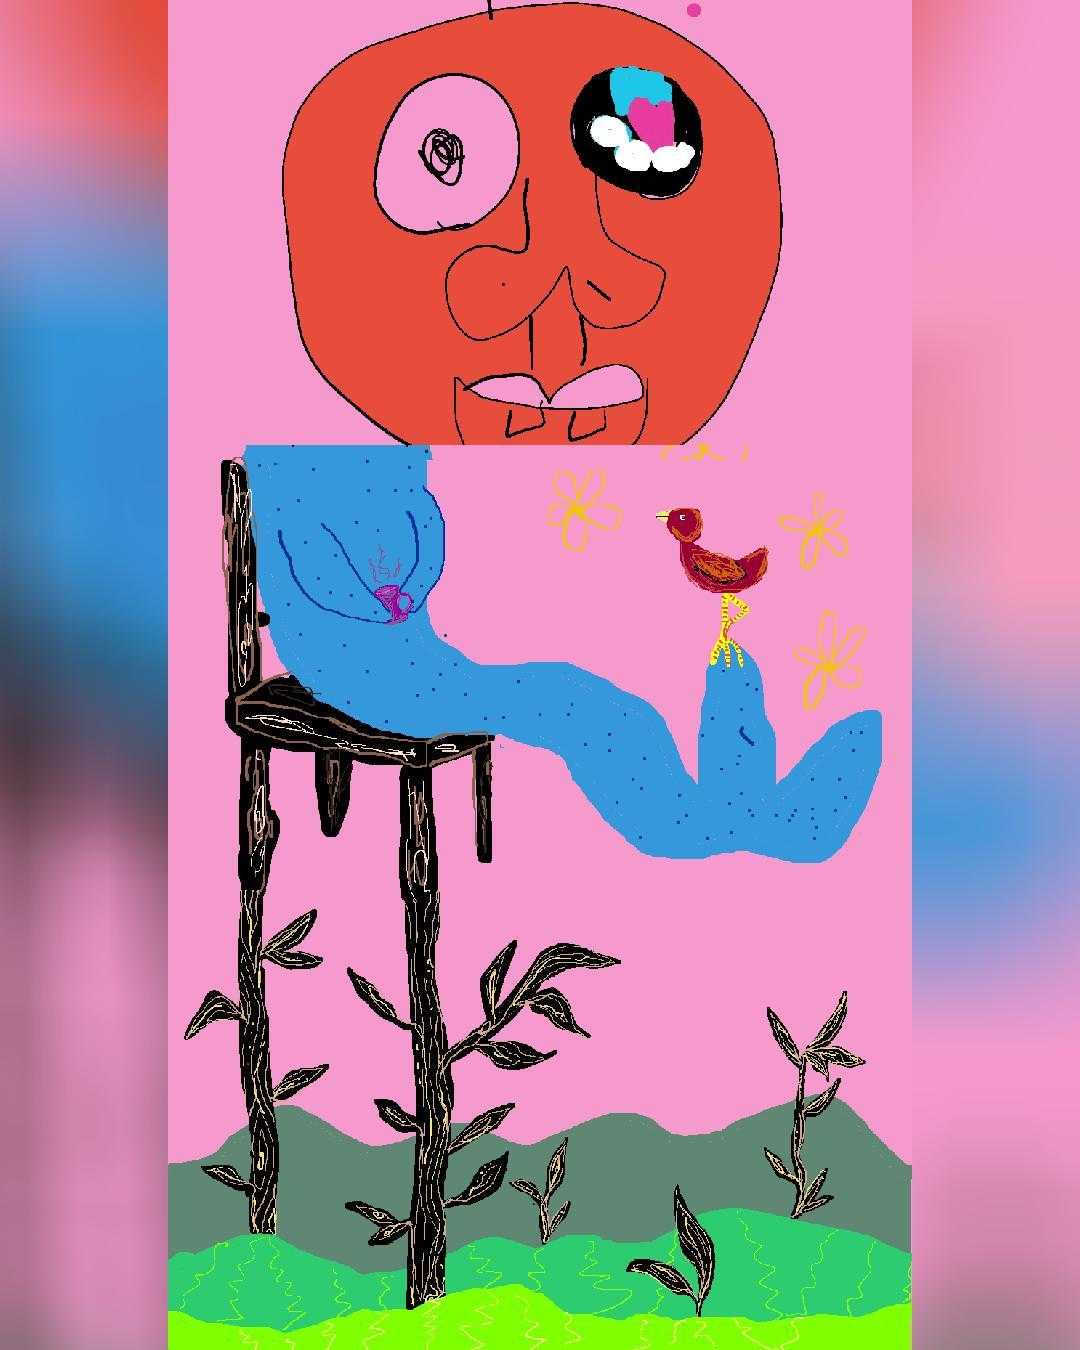 Exquisite corpse by suzebella, wannasleep, sarahblakehenry
.
One drawing, 3 artists.
Try out ScribbleX – the Exquisite Corpse App 🎨🖌
It's free 🤗 www.scribblex.com
.
.
.
#scribblex #drawing #draw #art #scribbleart #scribble #sketch #sketchbook #sketchart #artwork #creative #app #game #drawinggame #exquisitecorpse #abstractart #surrealism #surrealismworld #collaborativedrawing #collaborativeart #instaart #zeichnen #kunst #disegno #arte